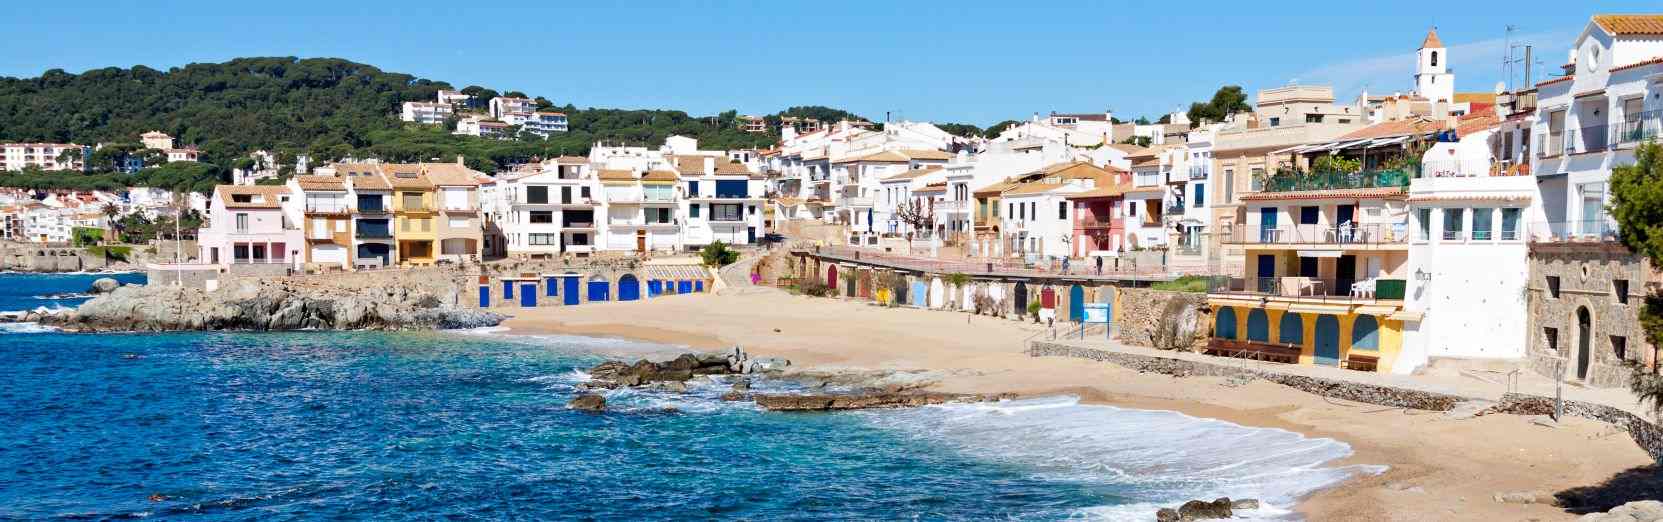 Spanien Urlaub günstig